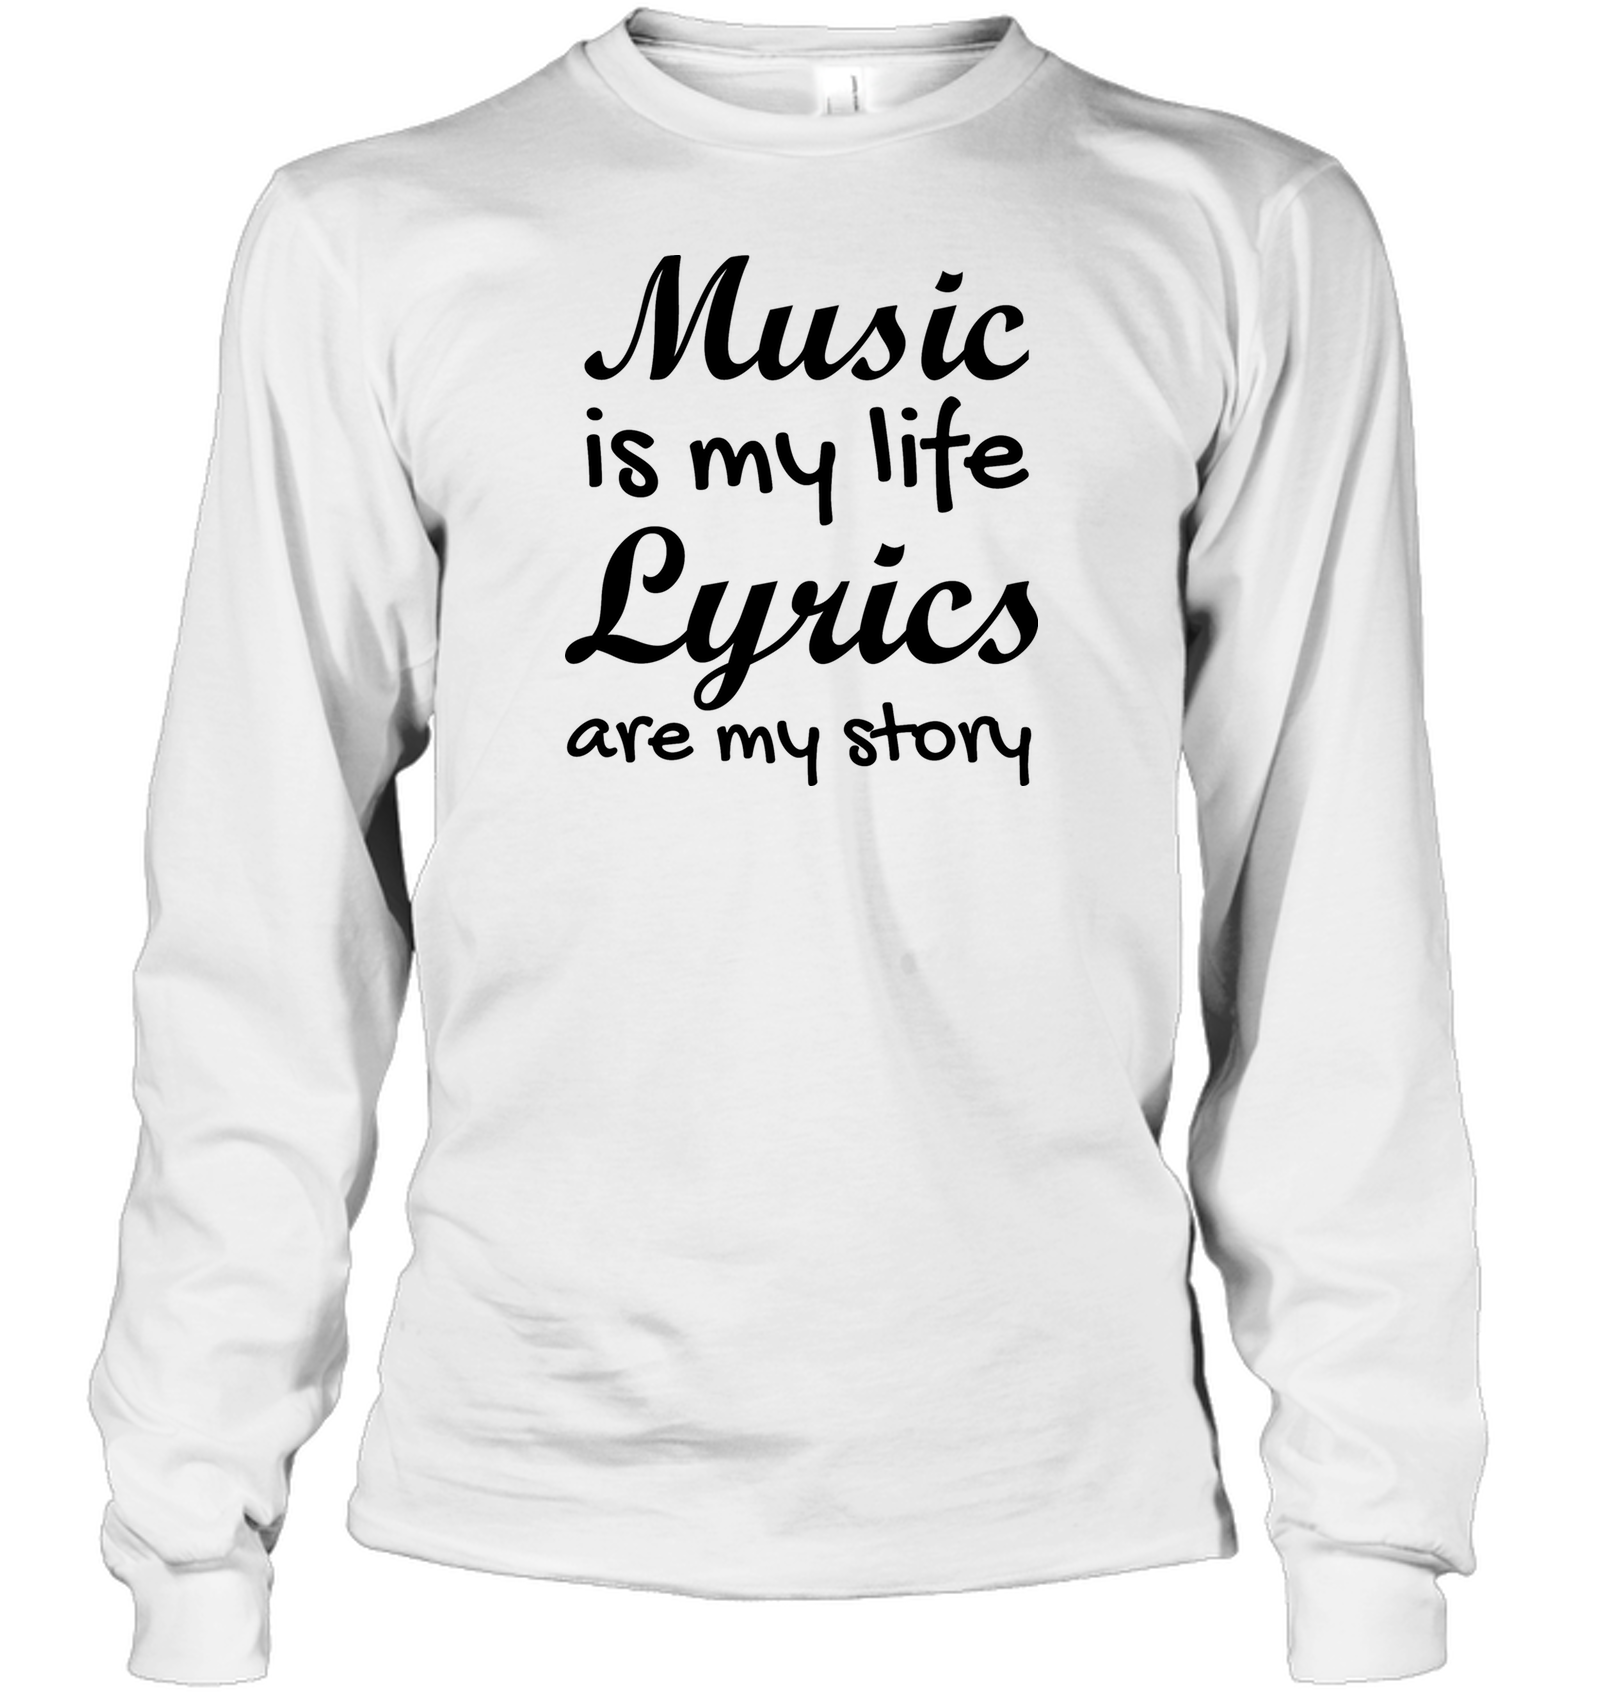 Music is my life Lyrics are my story - Gildan Adult Classic Long Sleeve T-Shirt